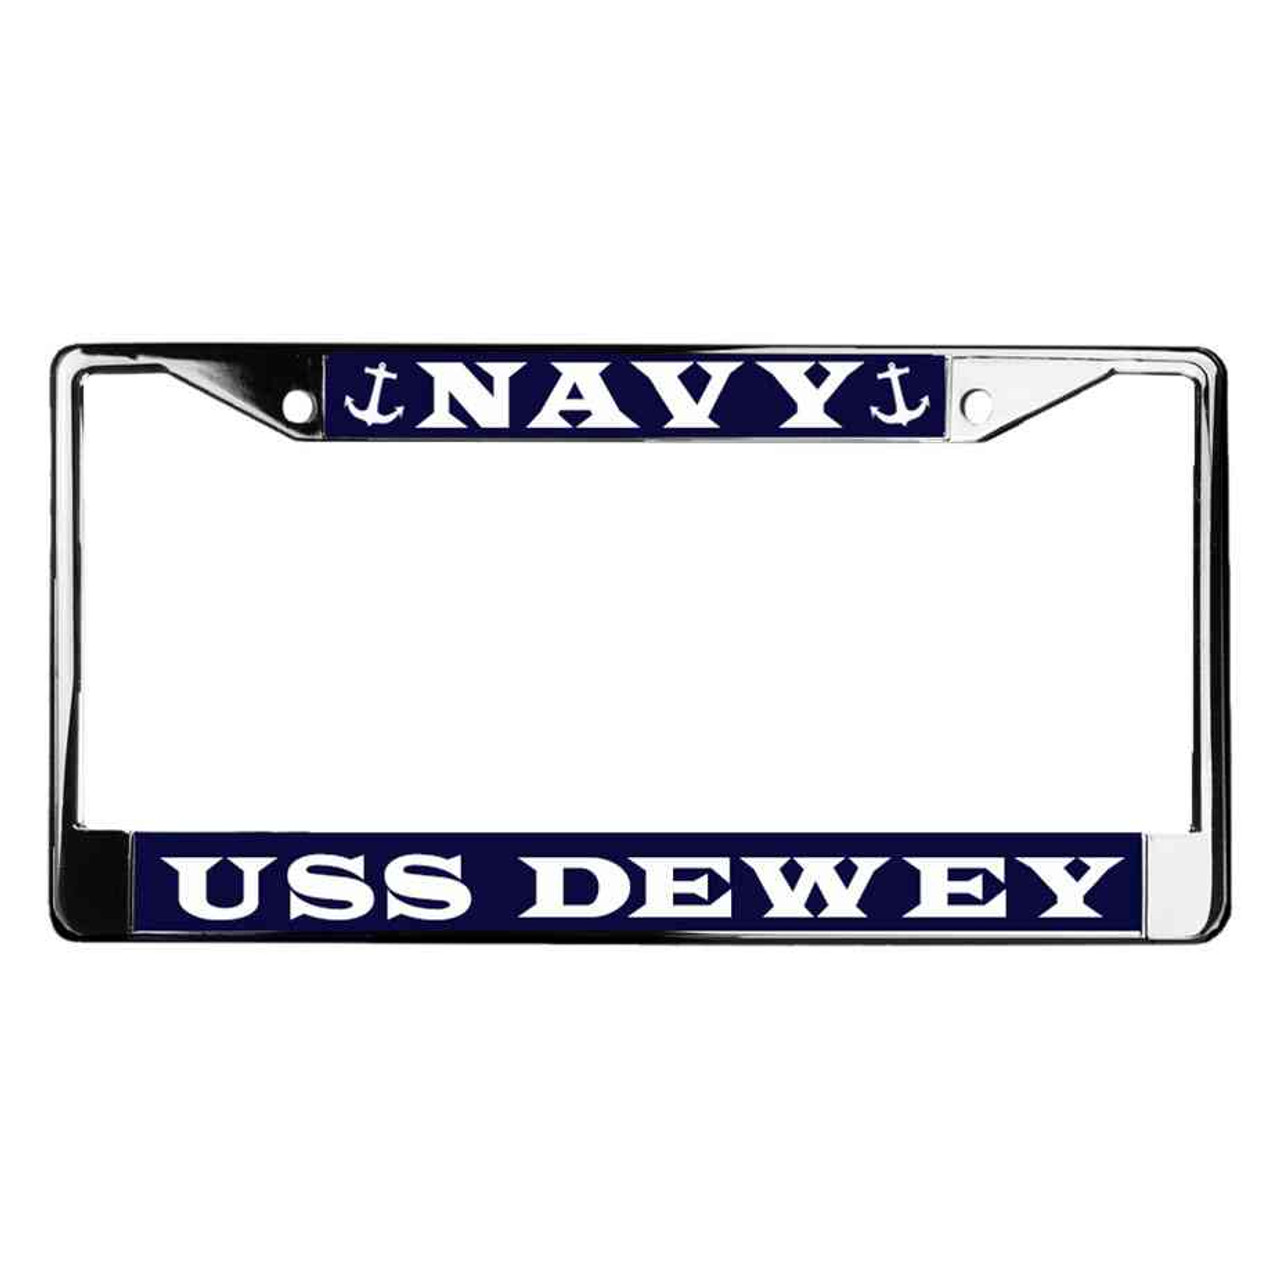 uss dewey license plate frame